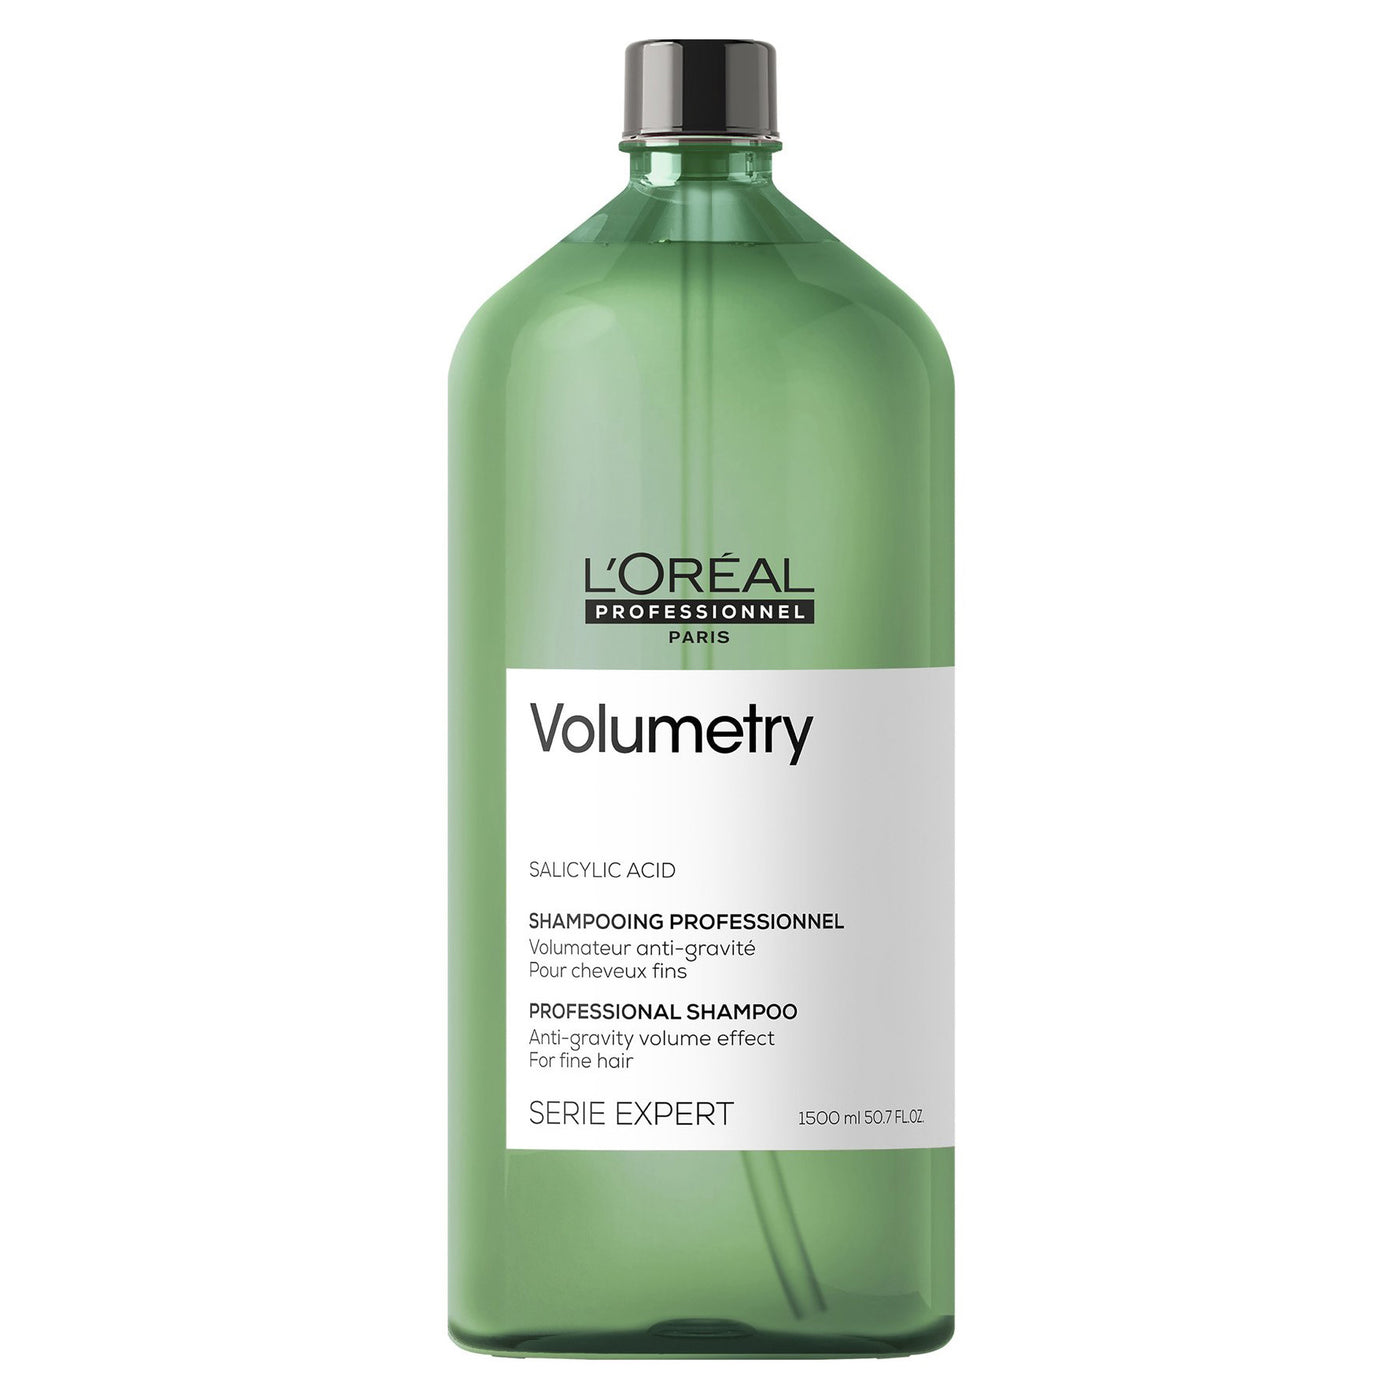 L'Oreal Professionnel Volumetry Shampoo 1.5 Litre